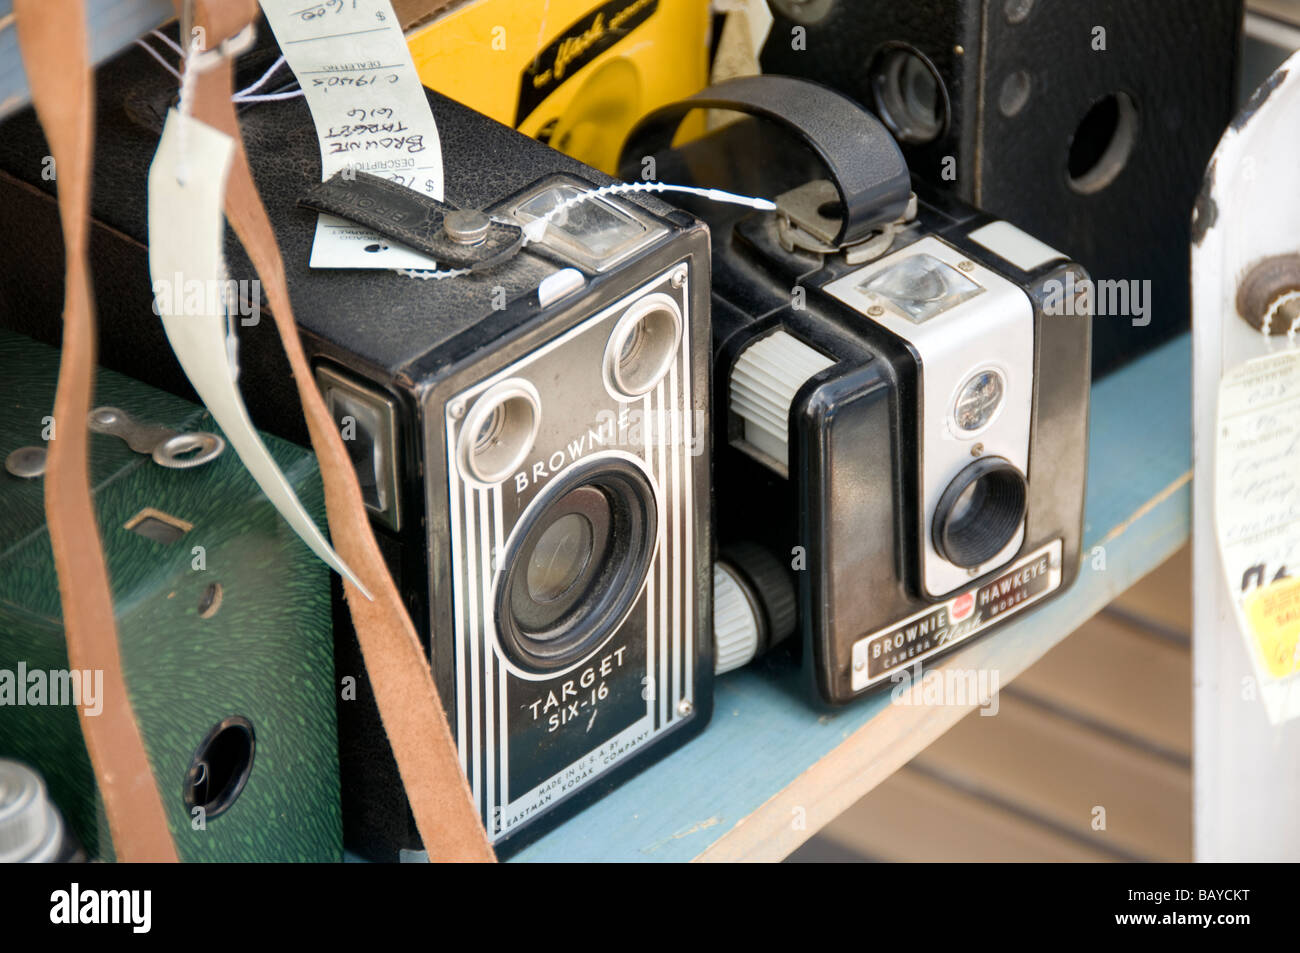 old brownie camera for sale at neighborhood sunday flea market Stock Photo